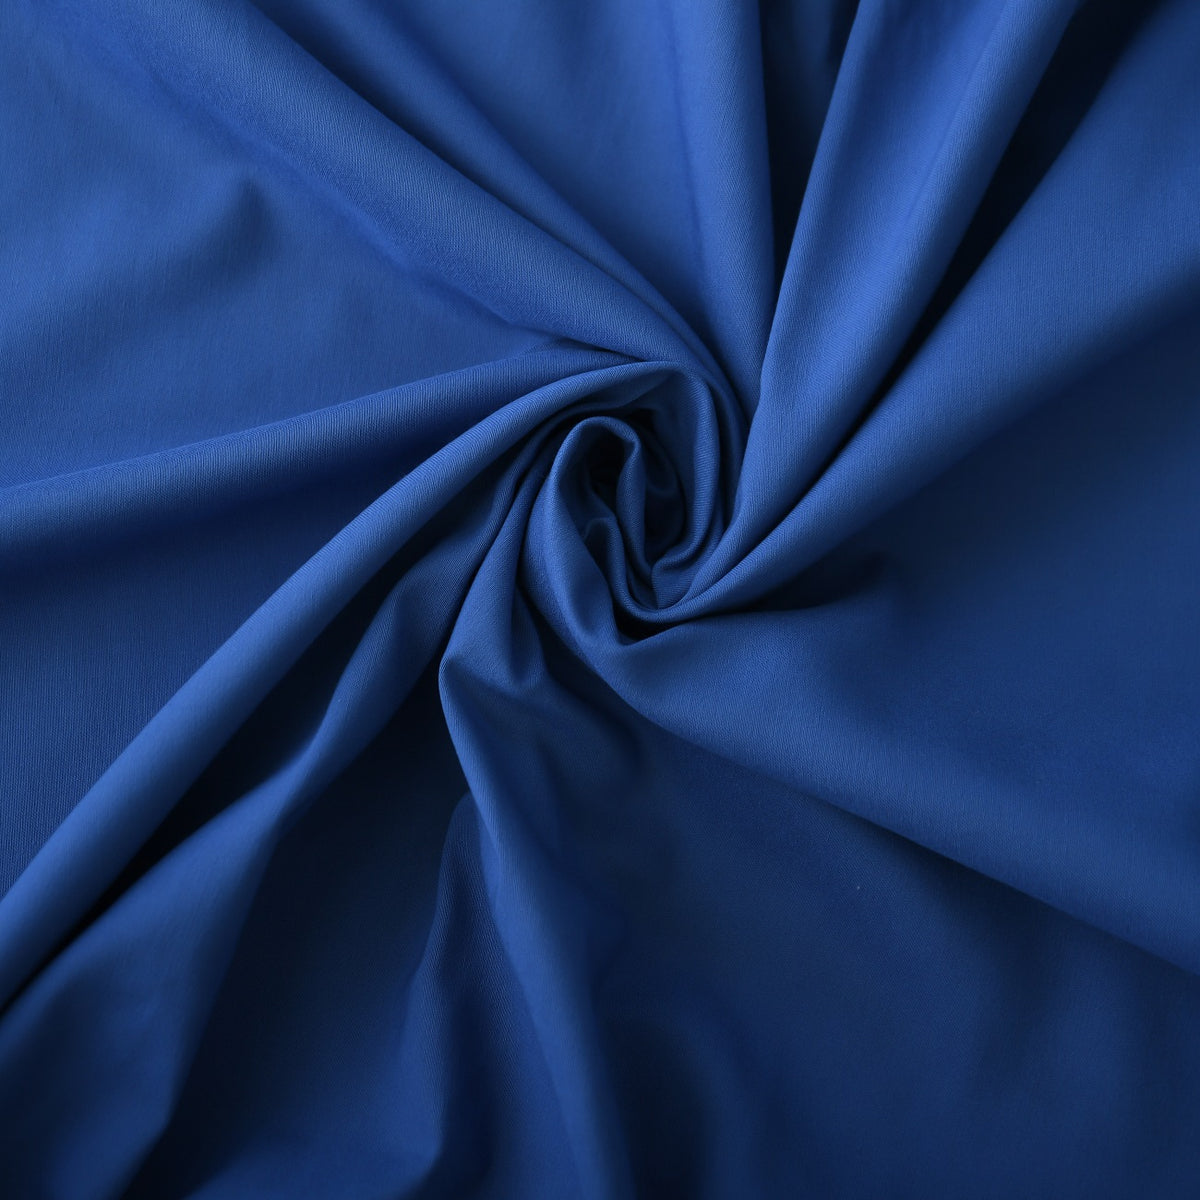 Night curtain blue soft